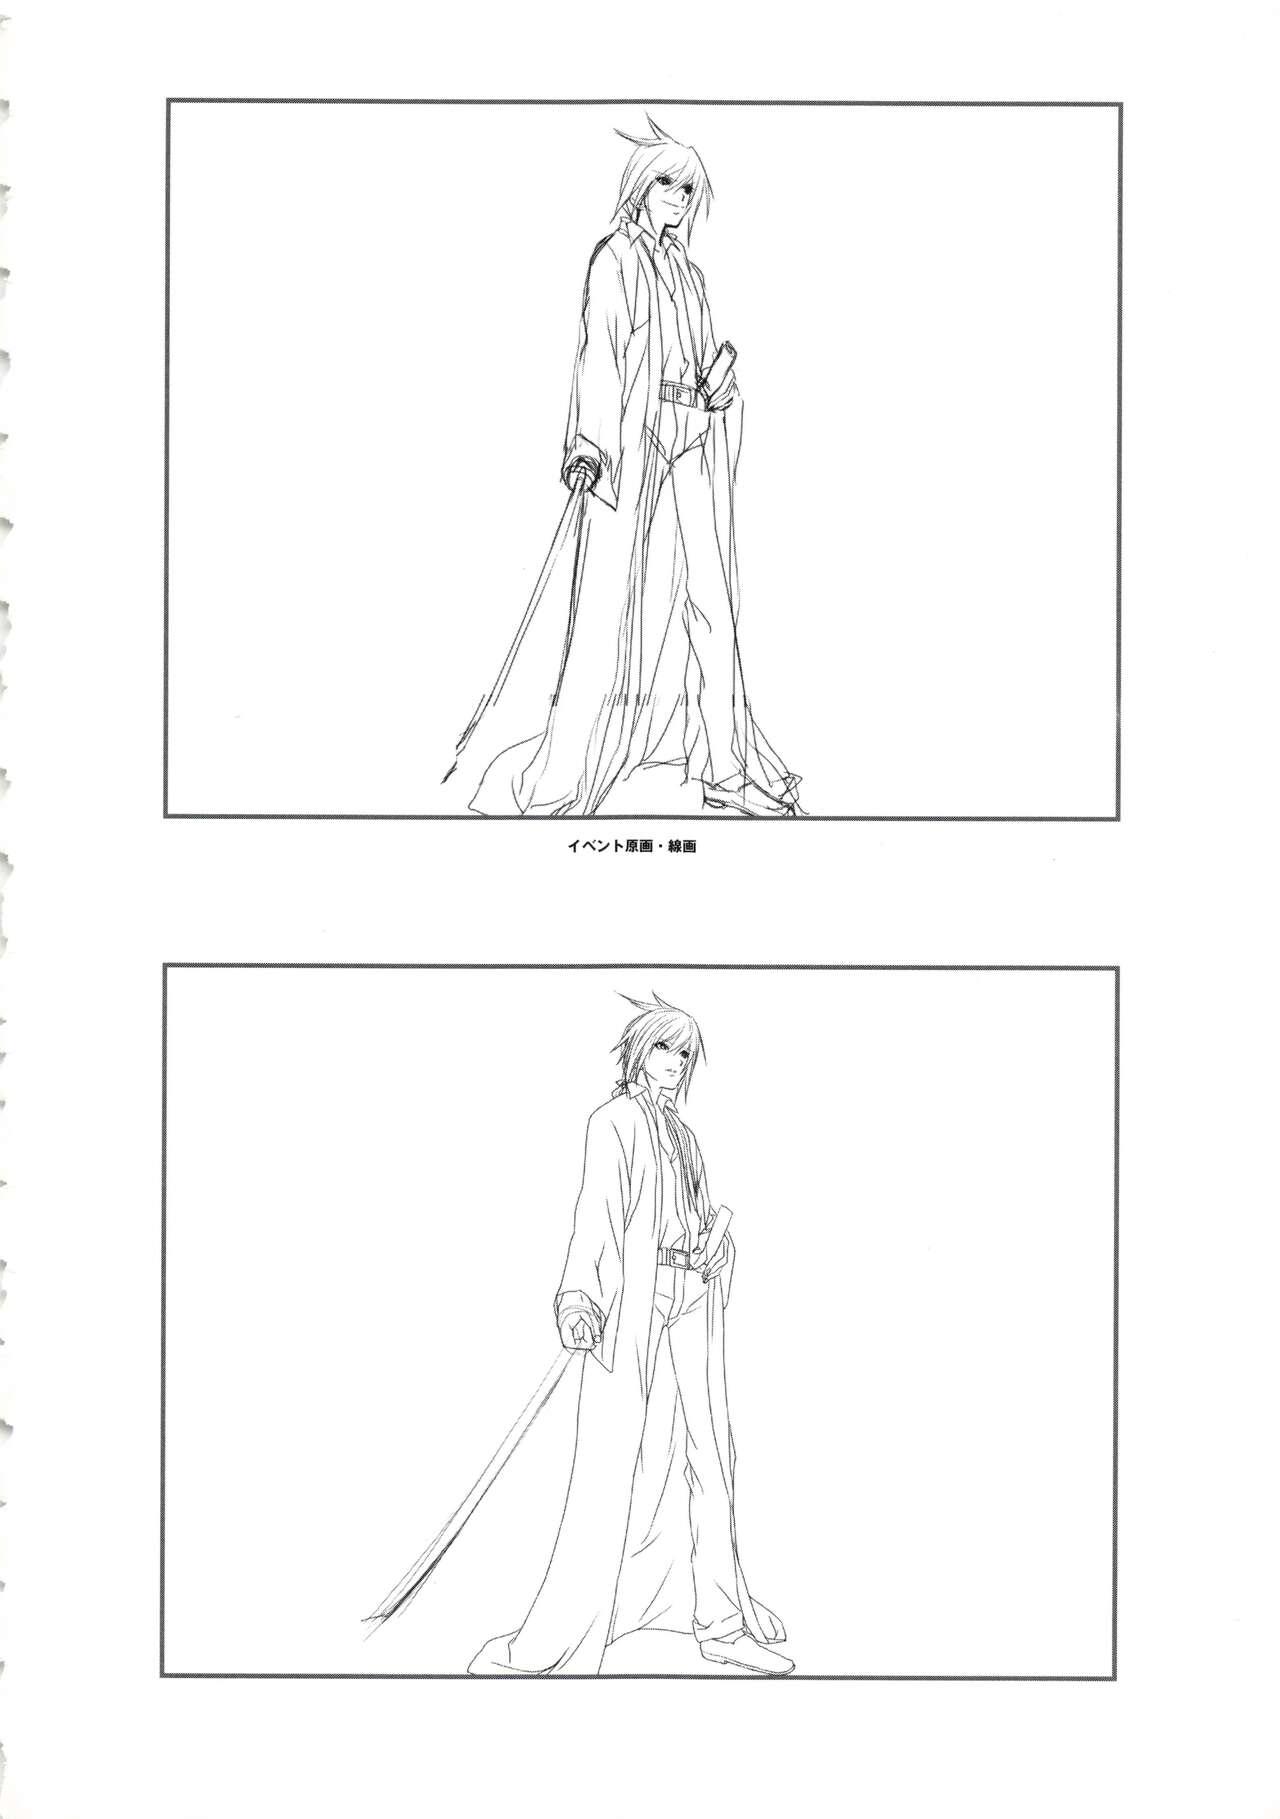 Hanachirasu - Initial Sketches and Unprocessed Illustrations - Selection 21